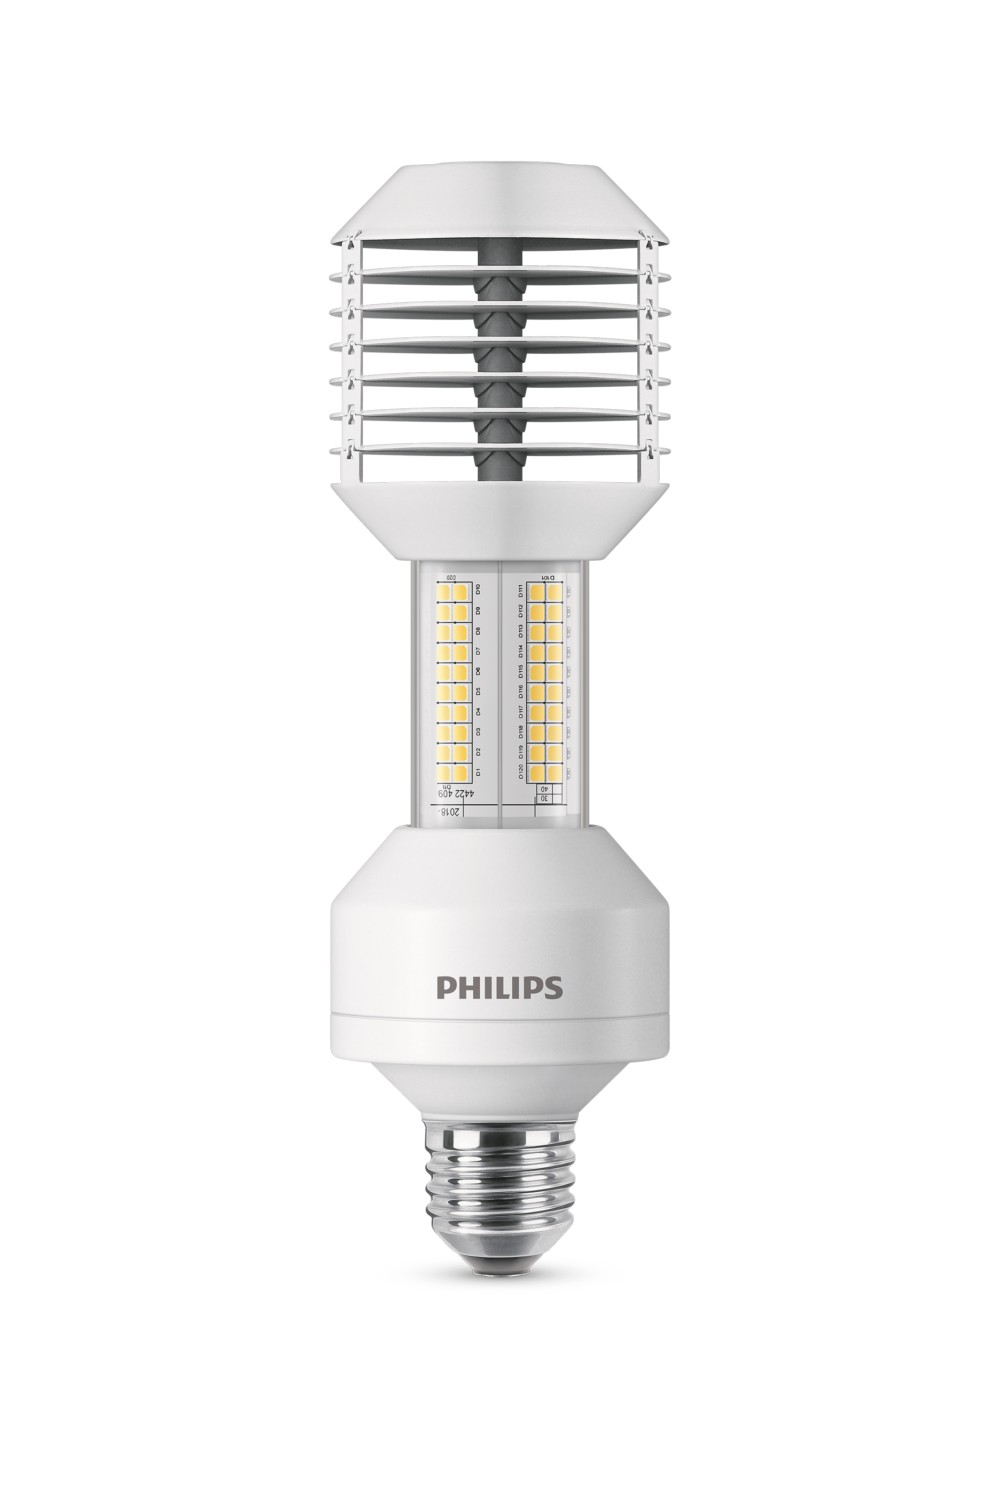 Philips LED SON-T IF 5.400 Lumen 34 Watt 727 E27 (70 Watt)